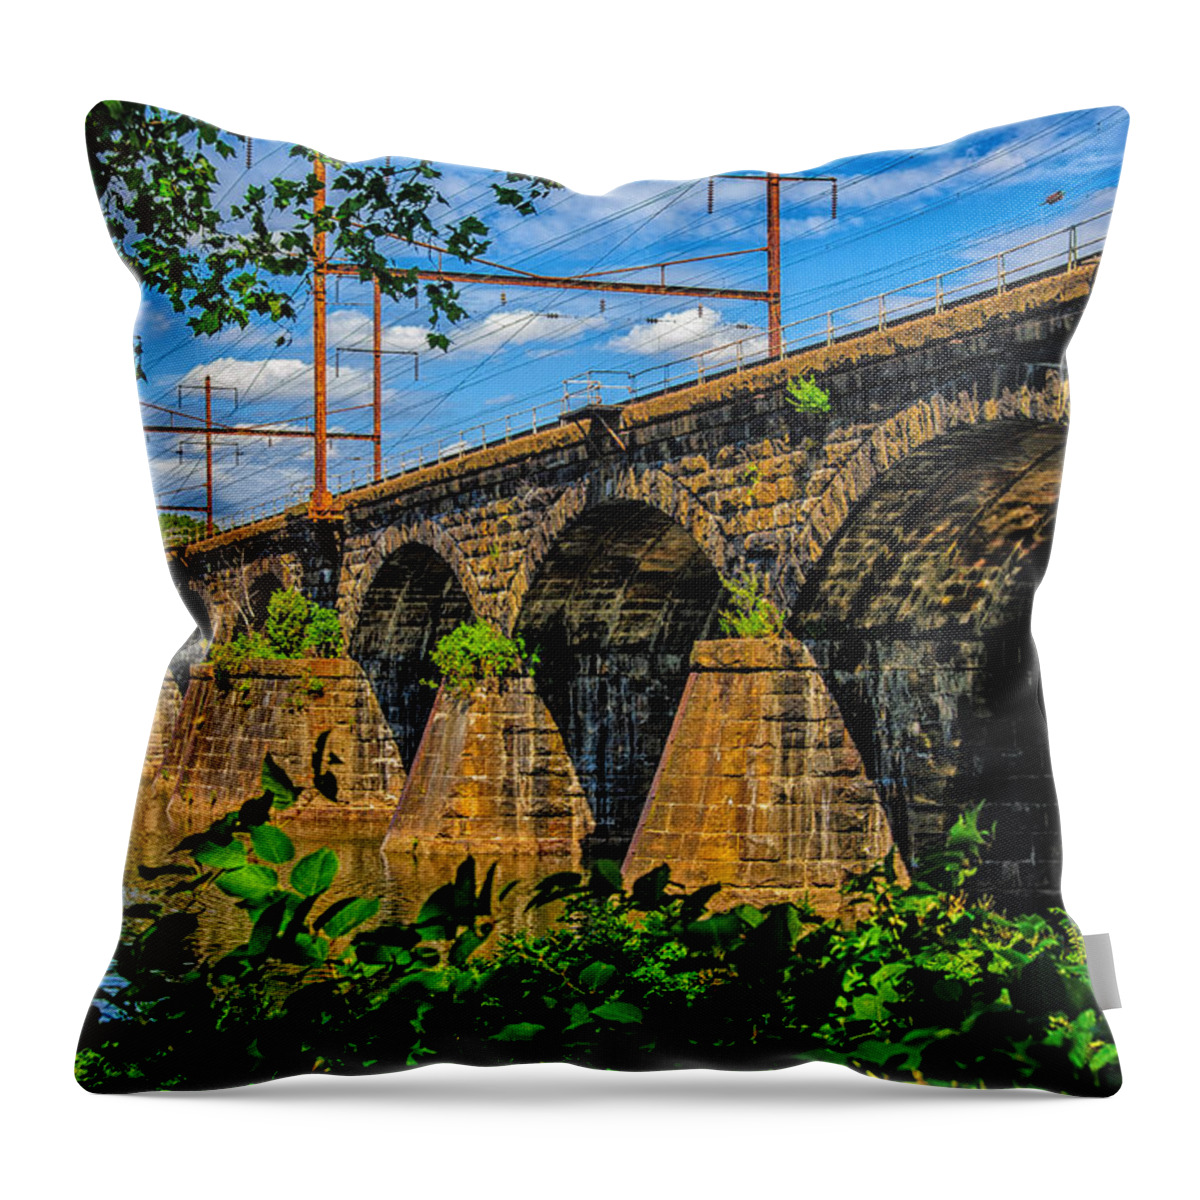 New Jersey Throw Pillow featuring the photograph Trenton Railroad Bridge by Louis Dallara